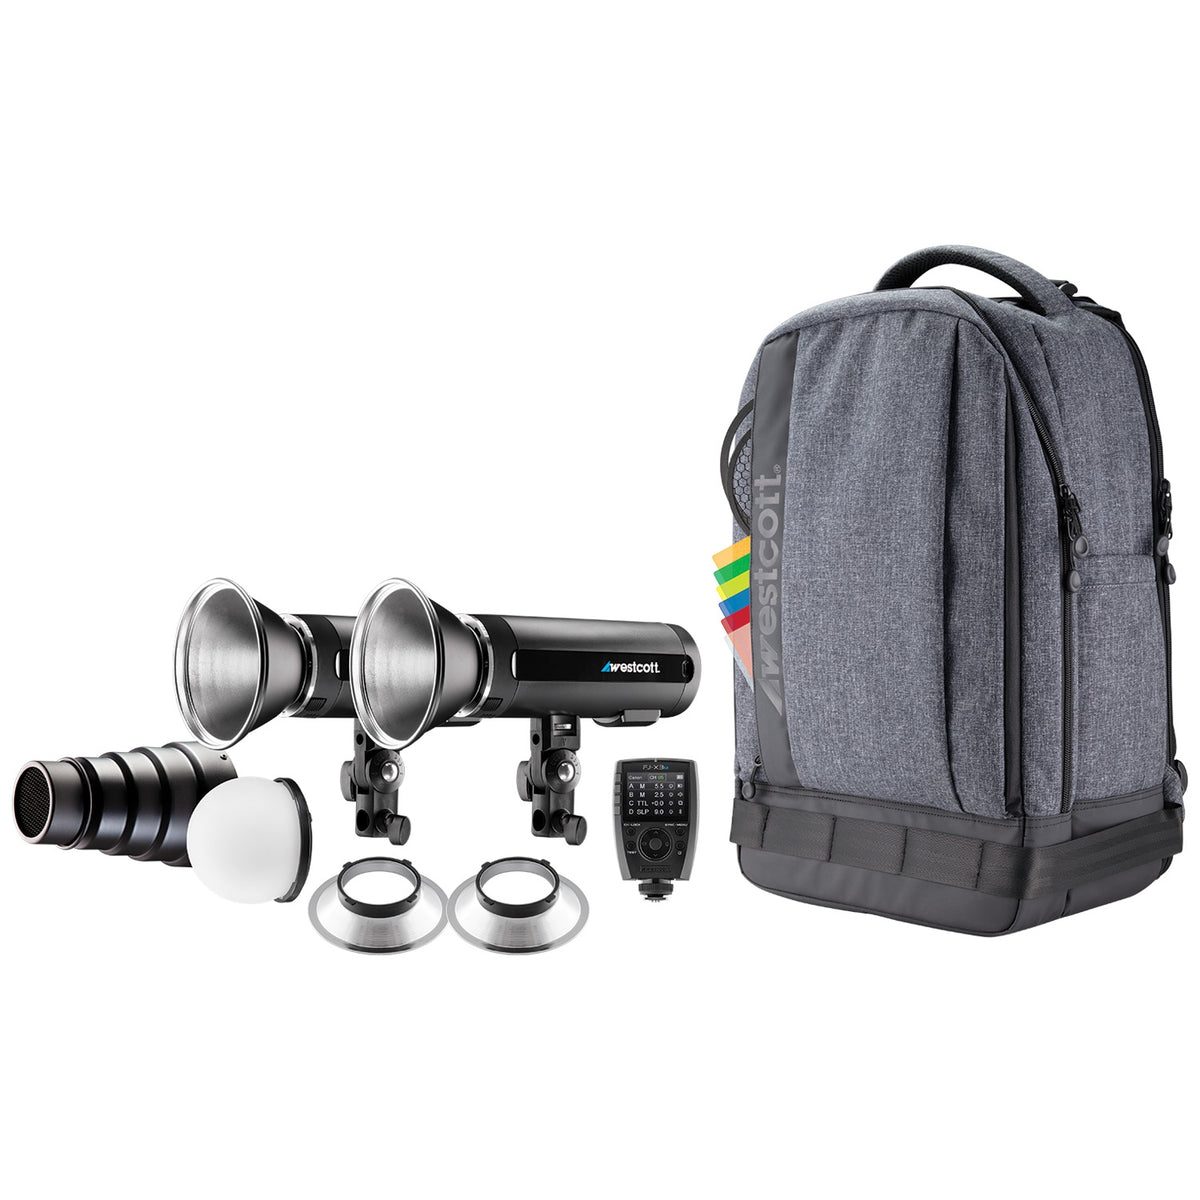 FJ200 Strobe 2-Light Backpack Kit with FJ-X3 M Universal Wireless Trigger